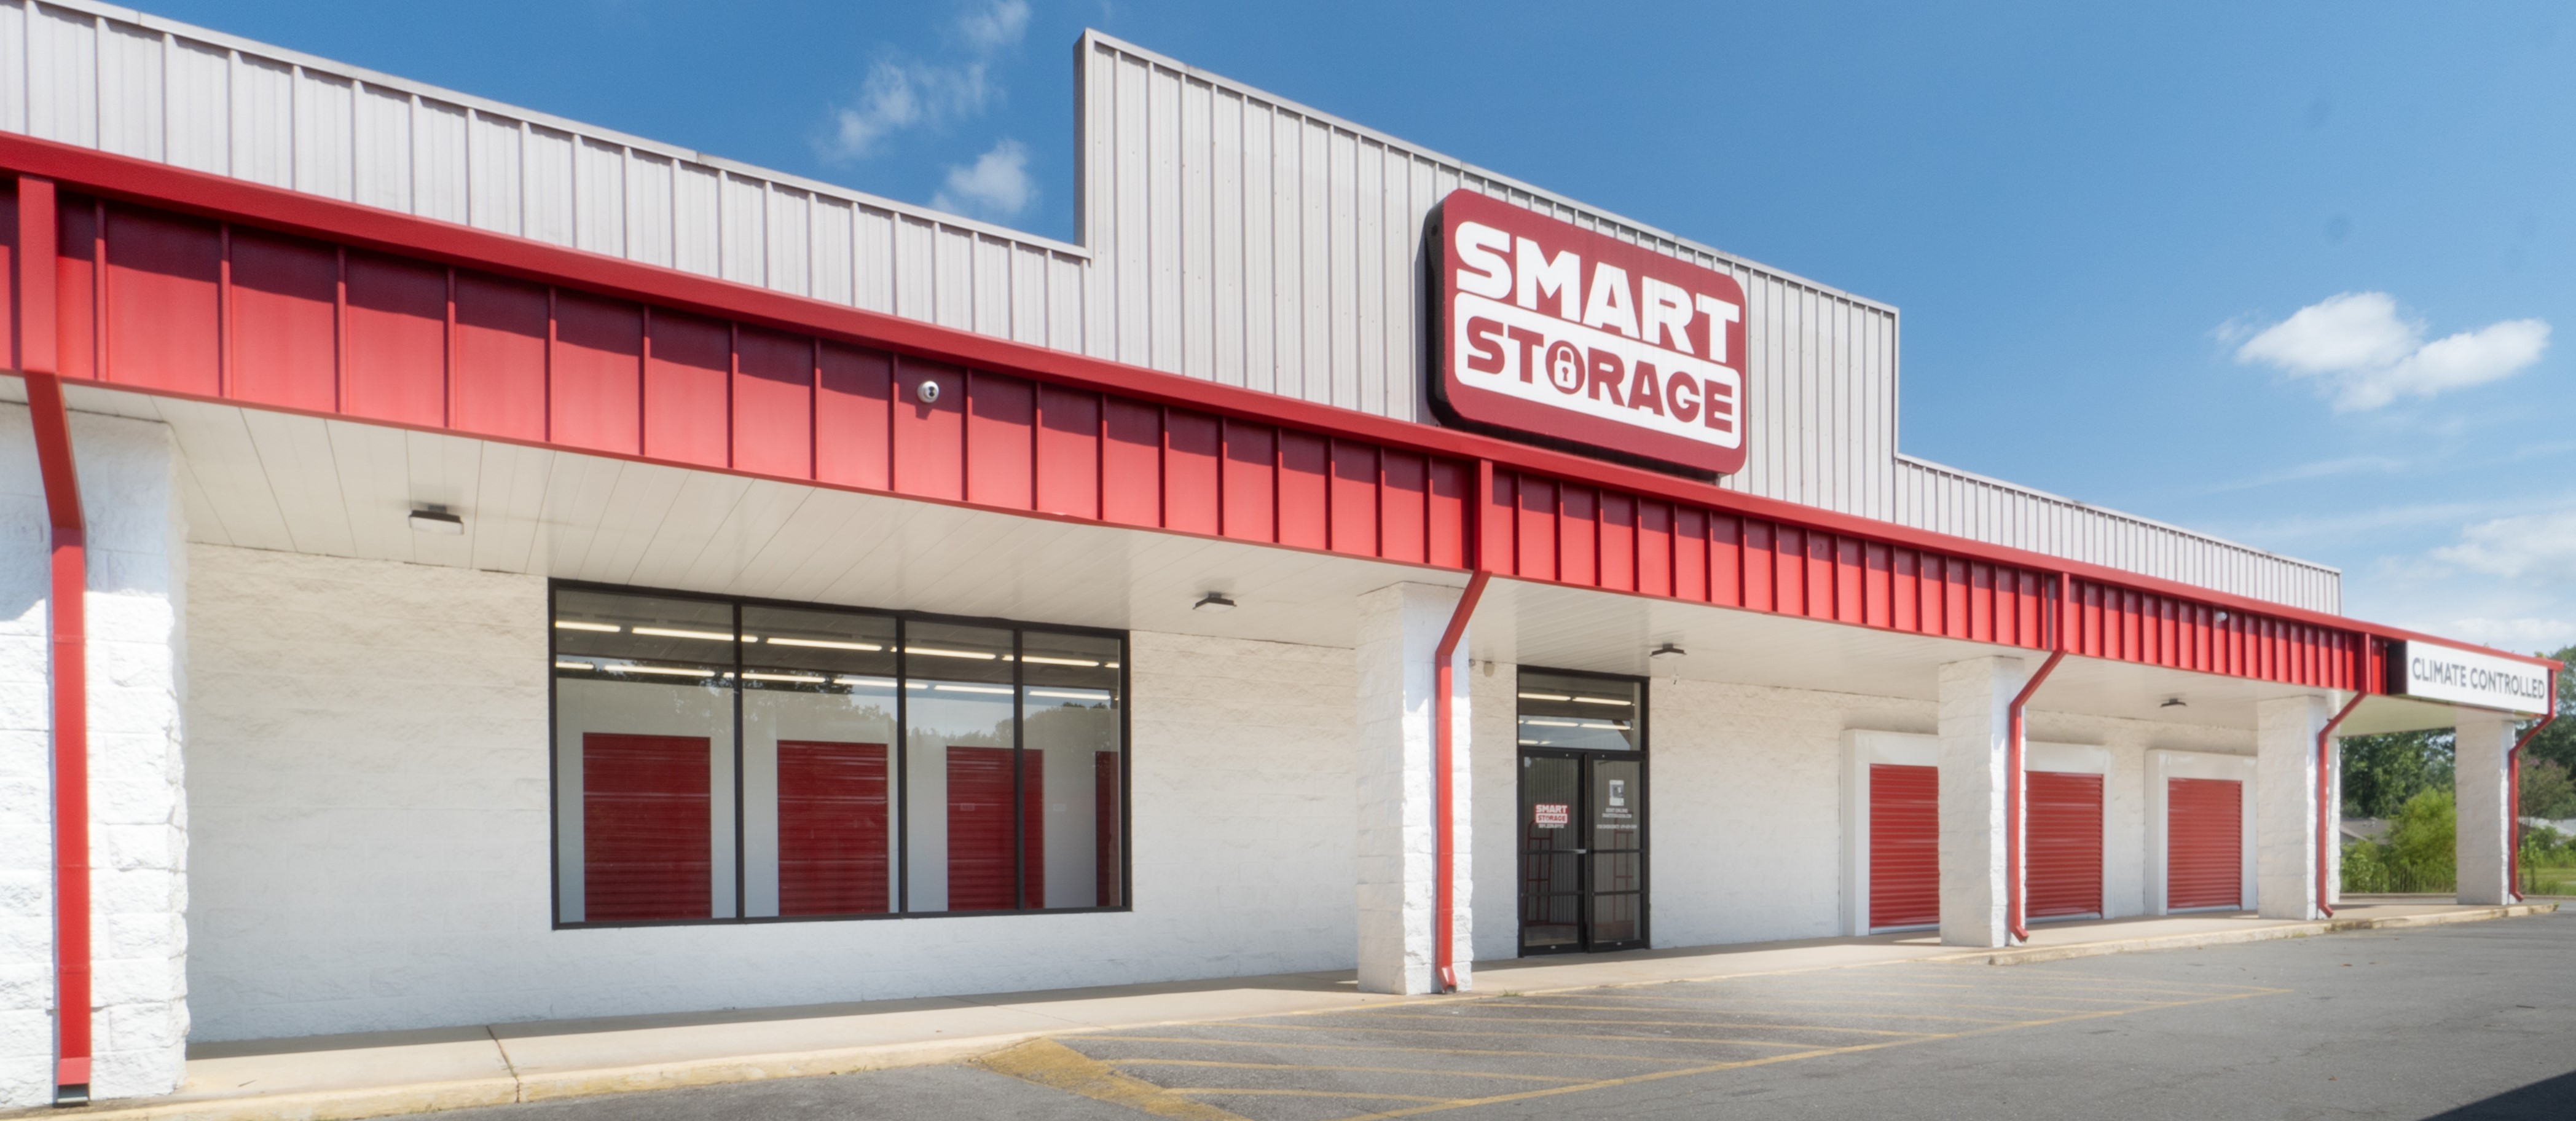 smart storage - sheridan